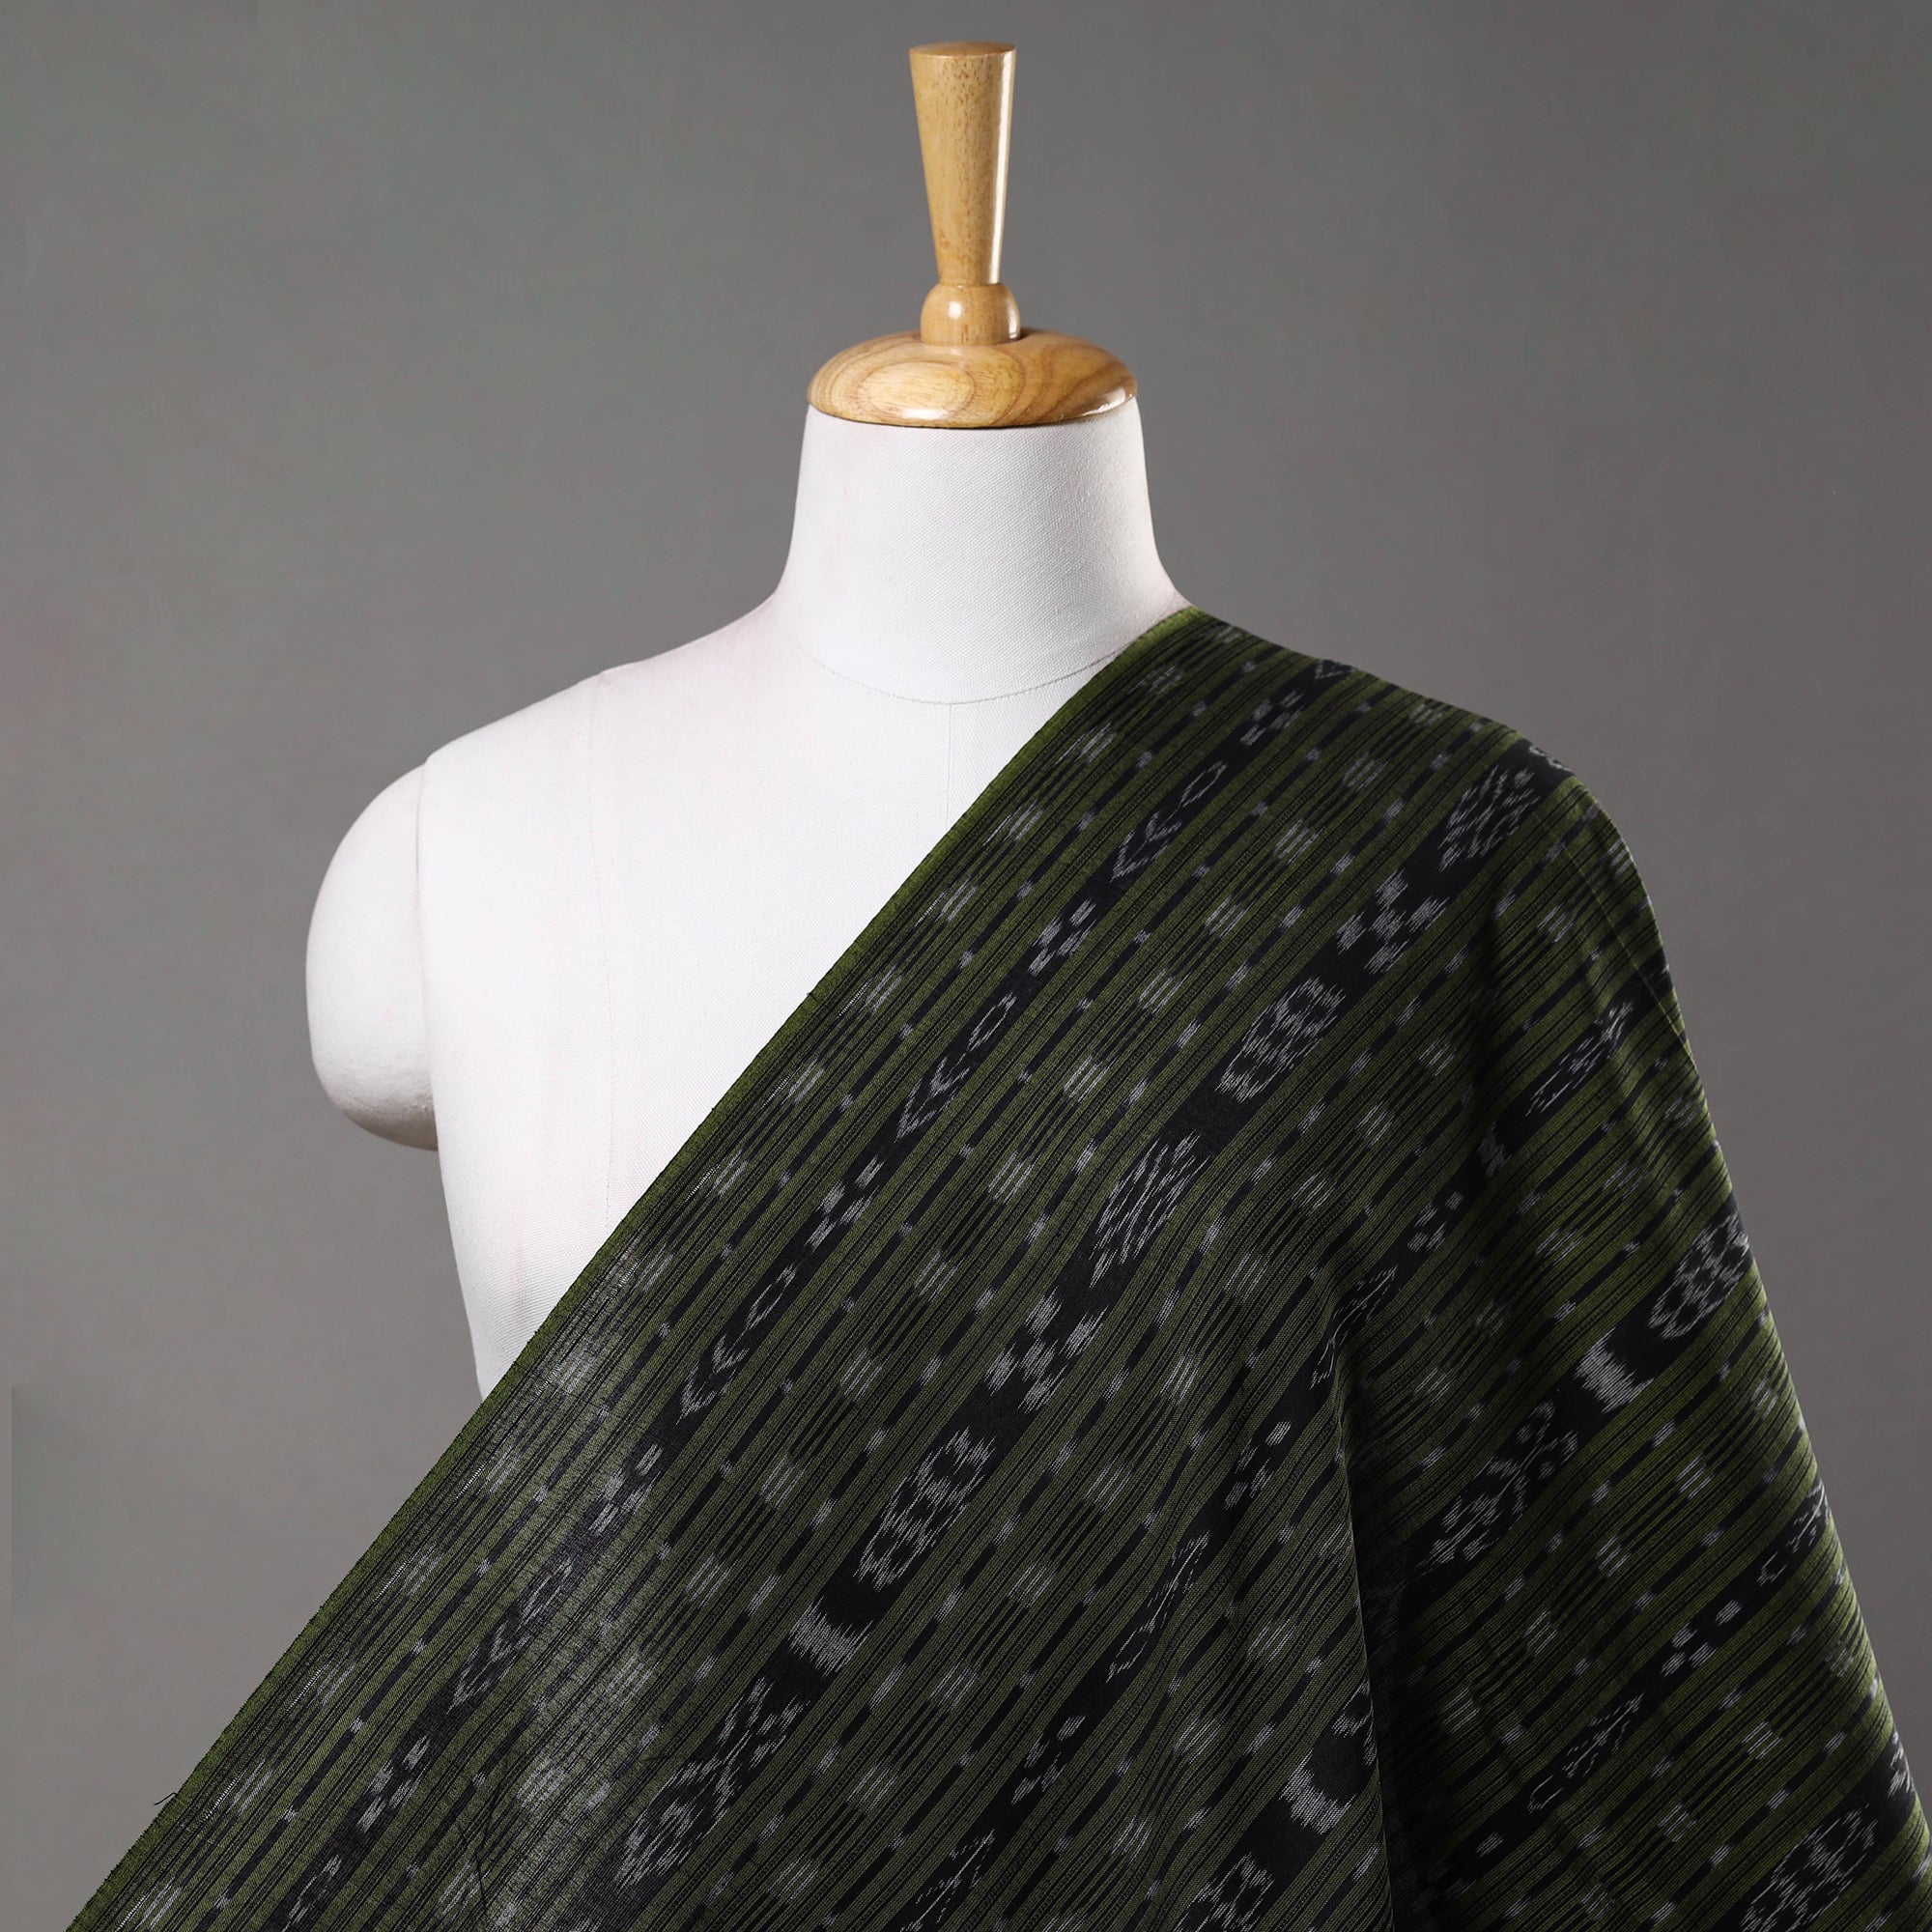 Latest Sambalpuri New Dress Design, cotton kurti design, Part-1 - YouTube